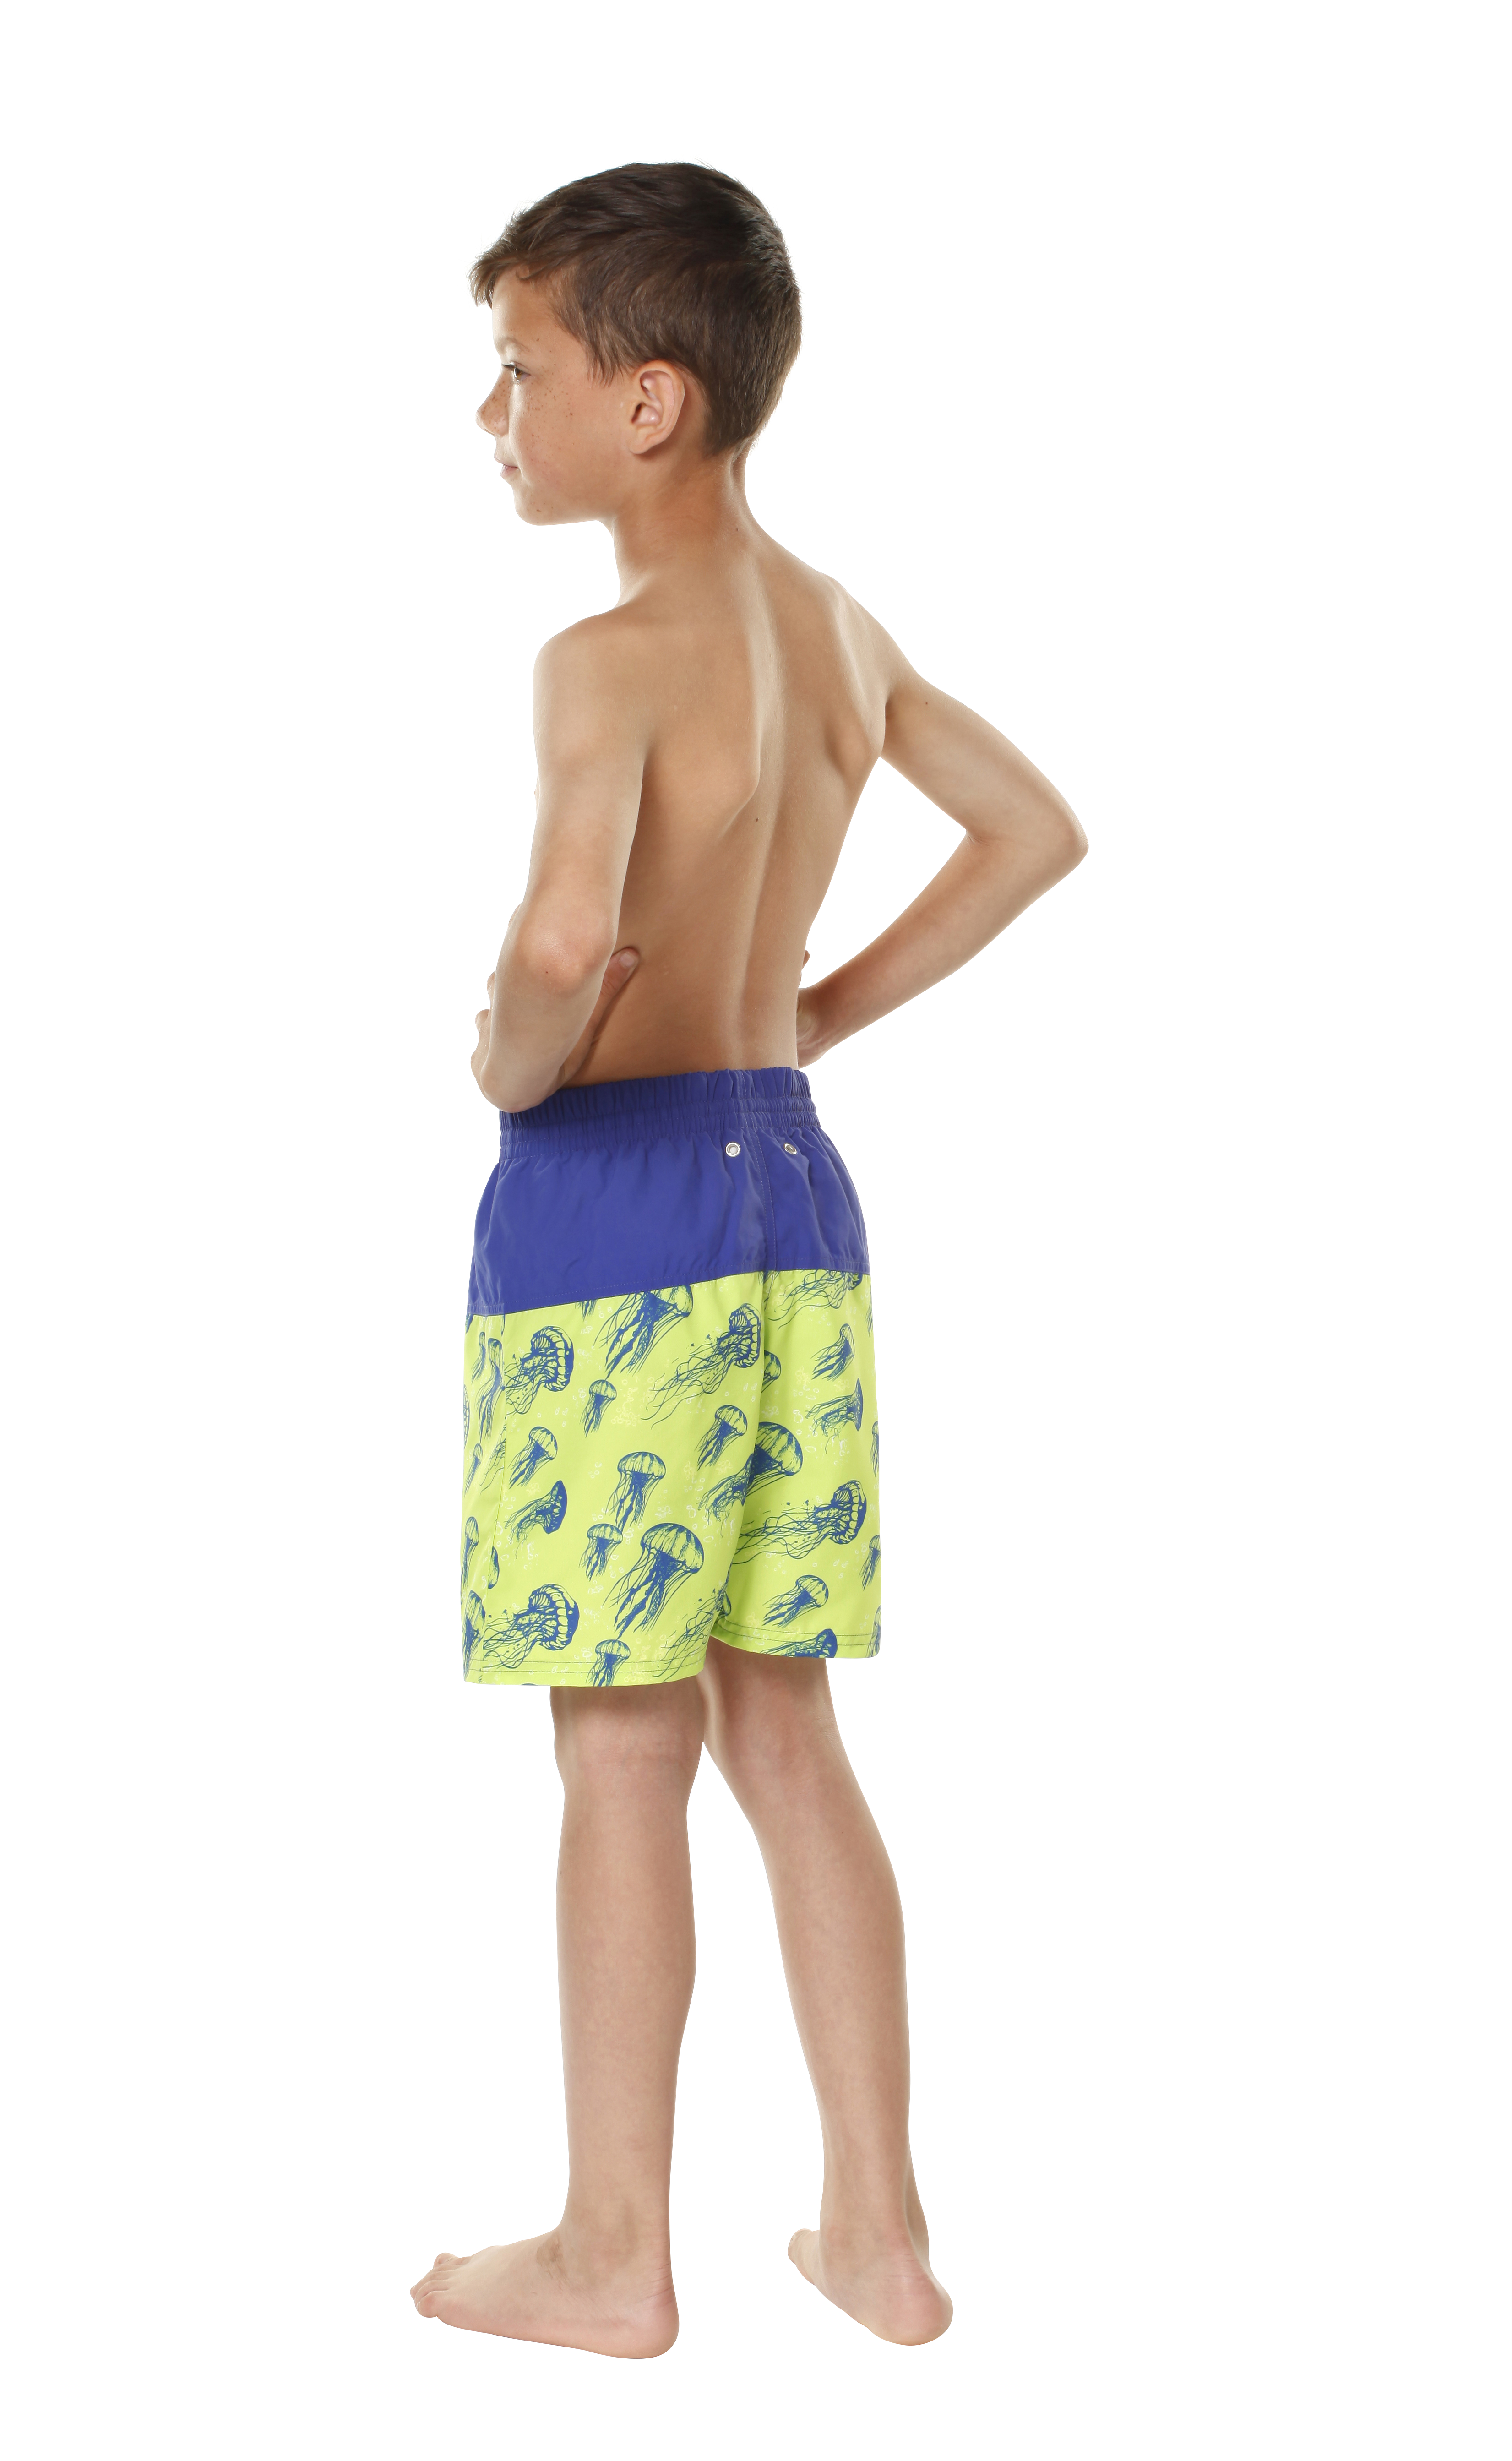 Child’s Bristol City Swim Shorts  With Pockets Size 11/12 Yrs  BNWT 